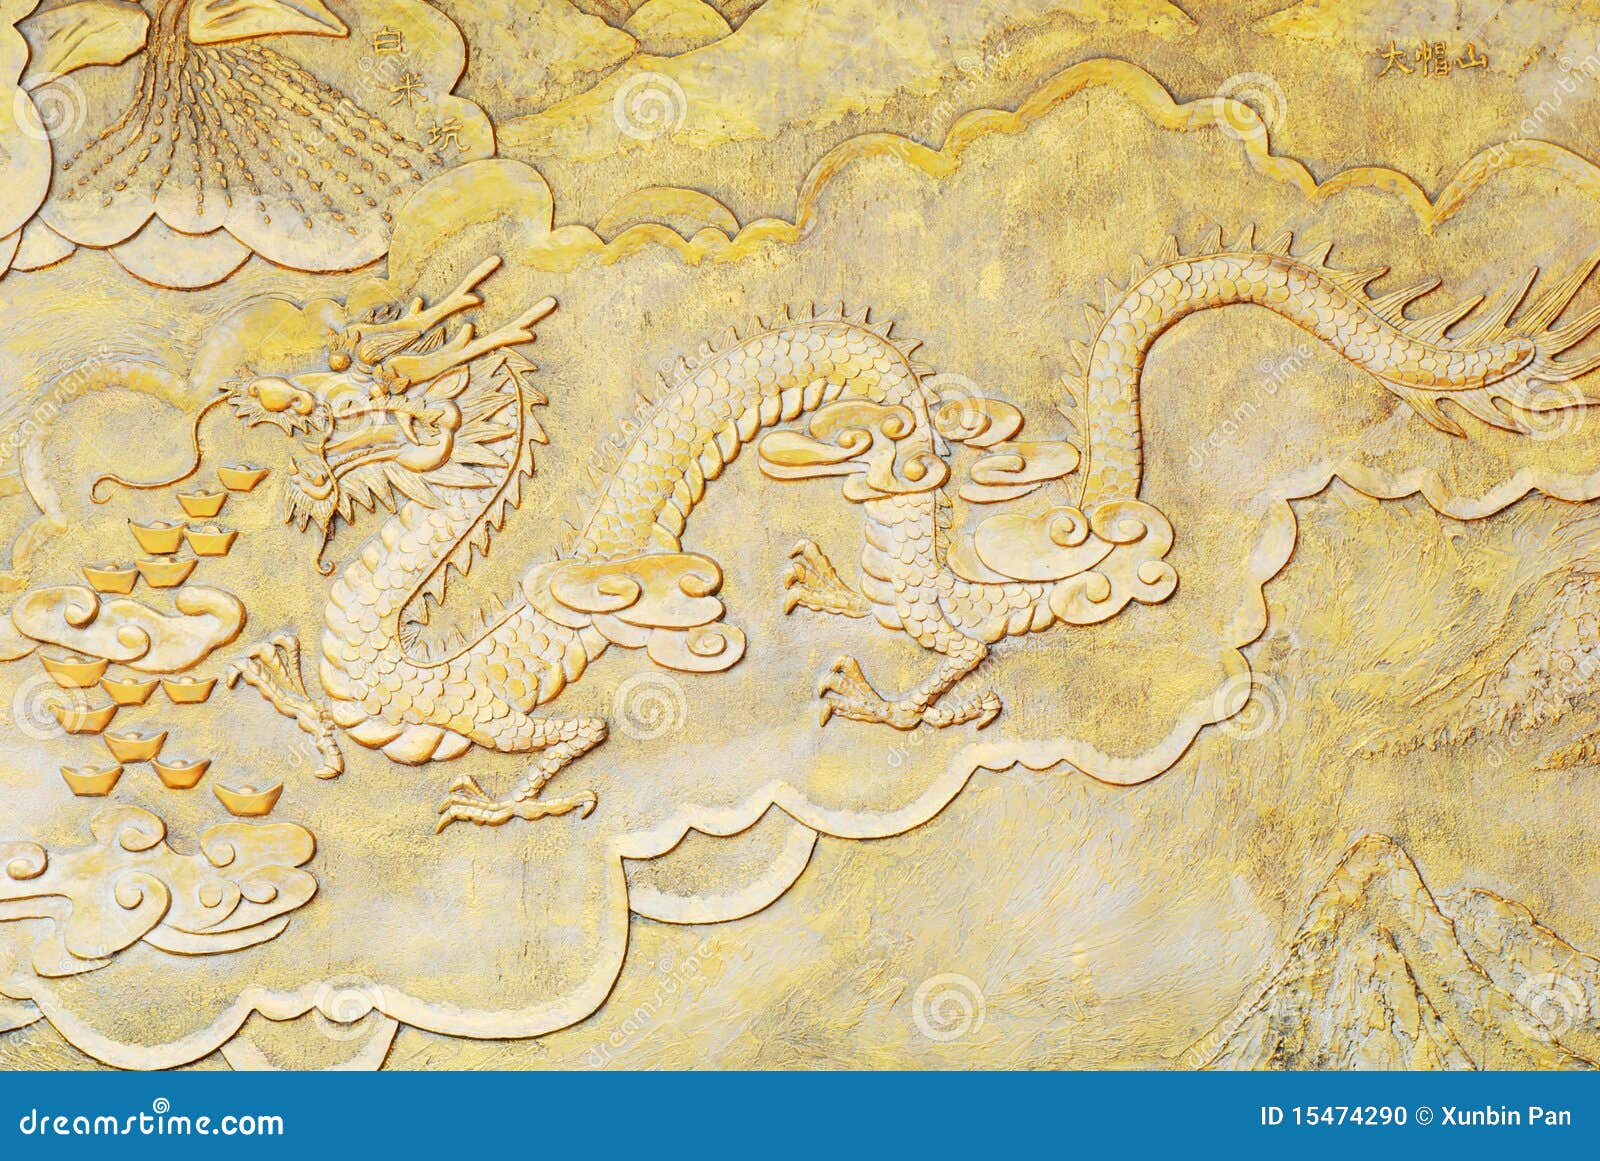 religion golden relief of dragon